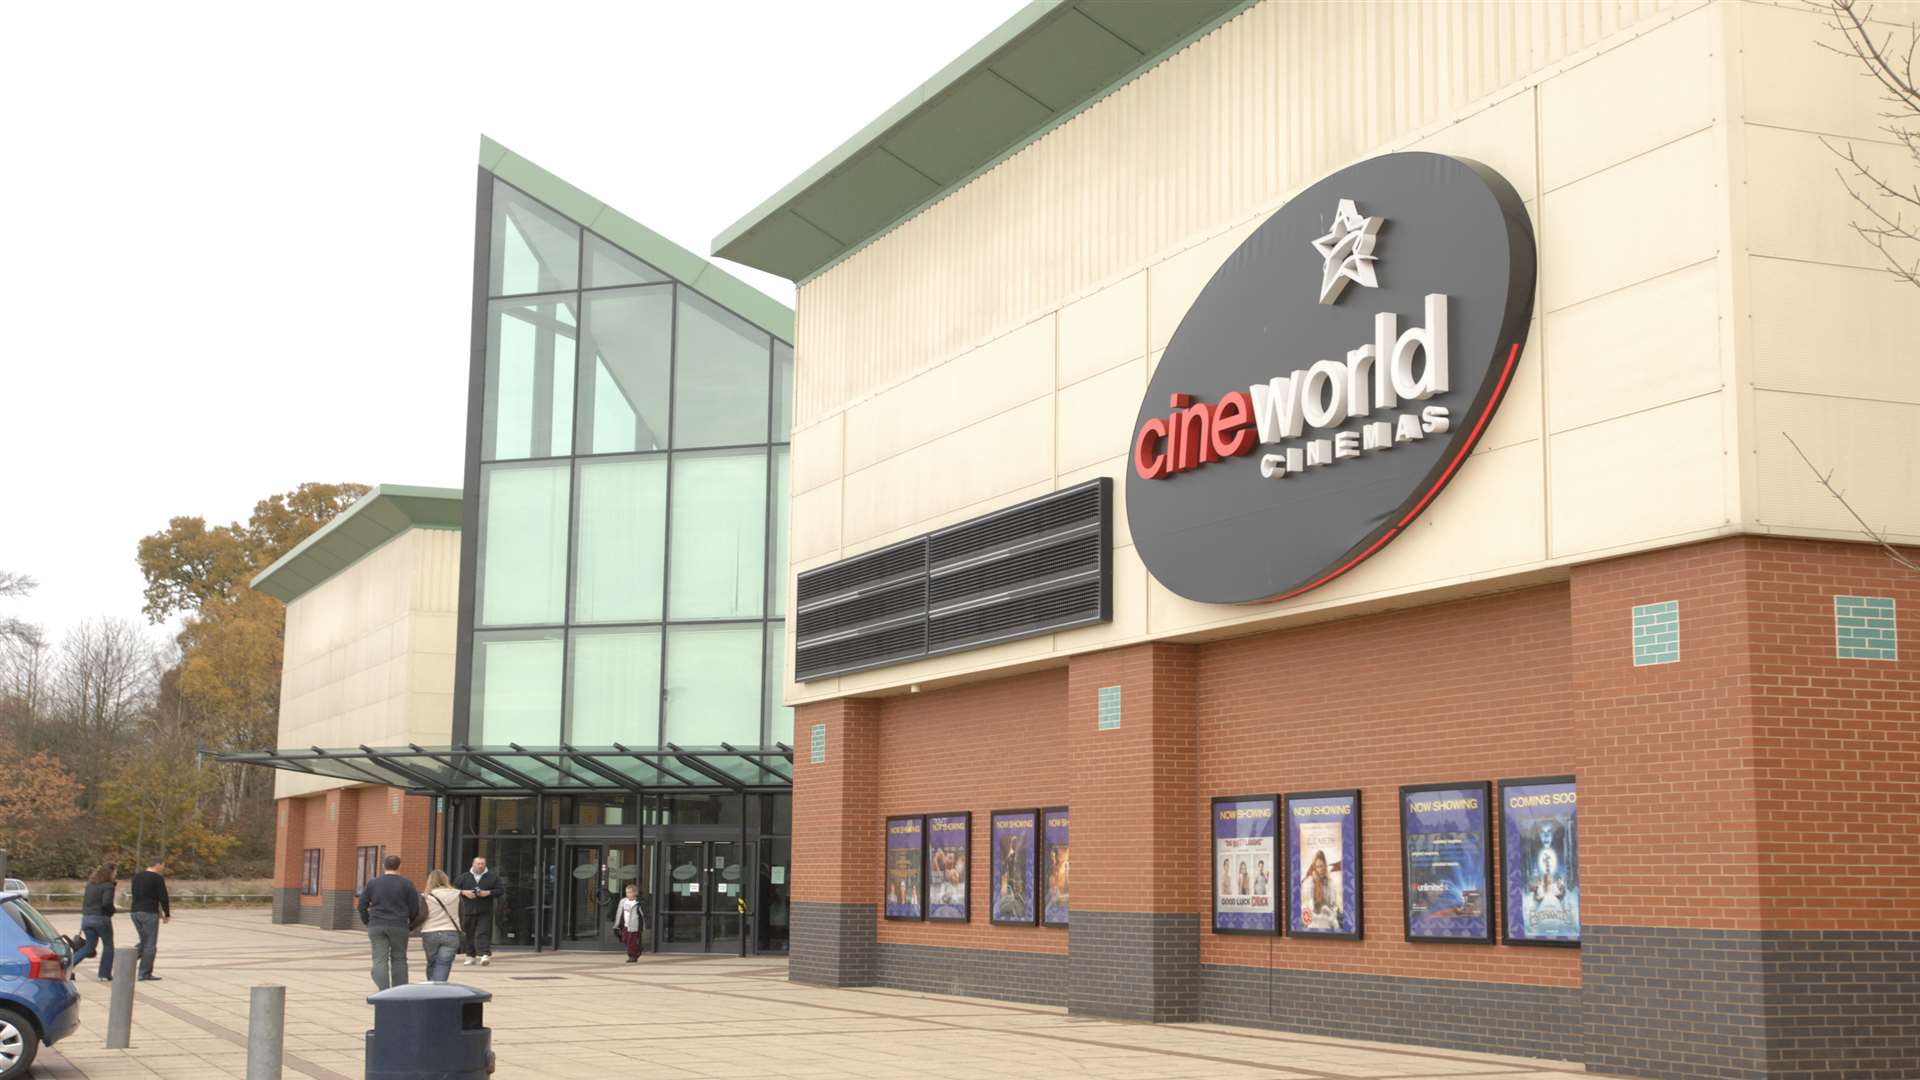 Customers were surprised to see Sir Paul at Cineworld in Ashford